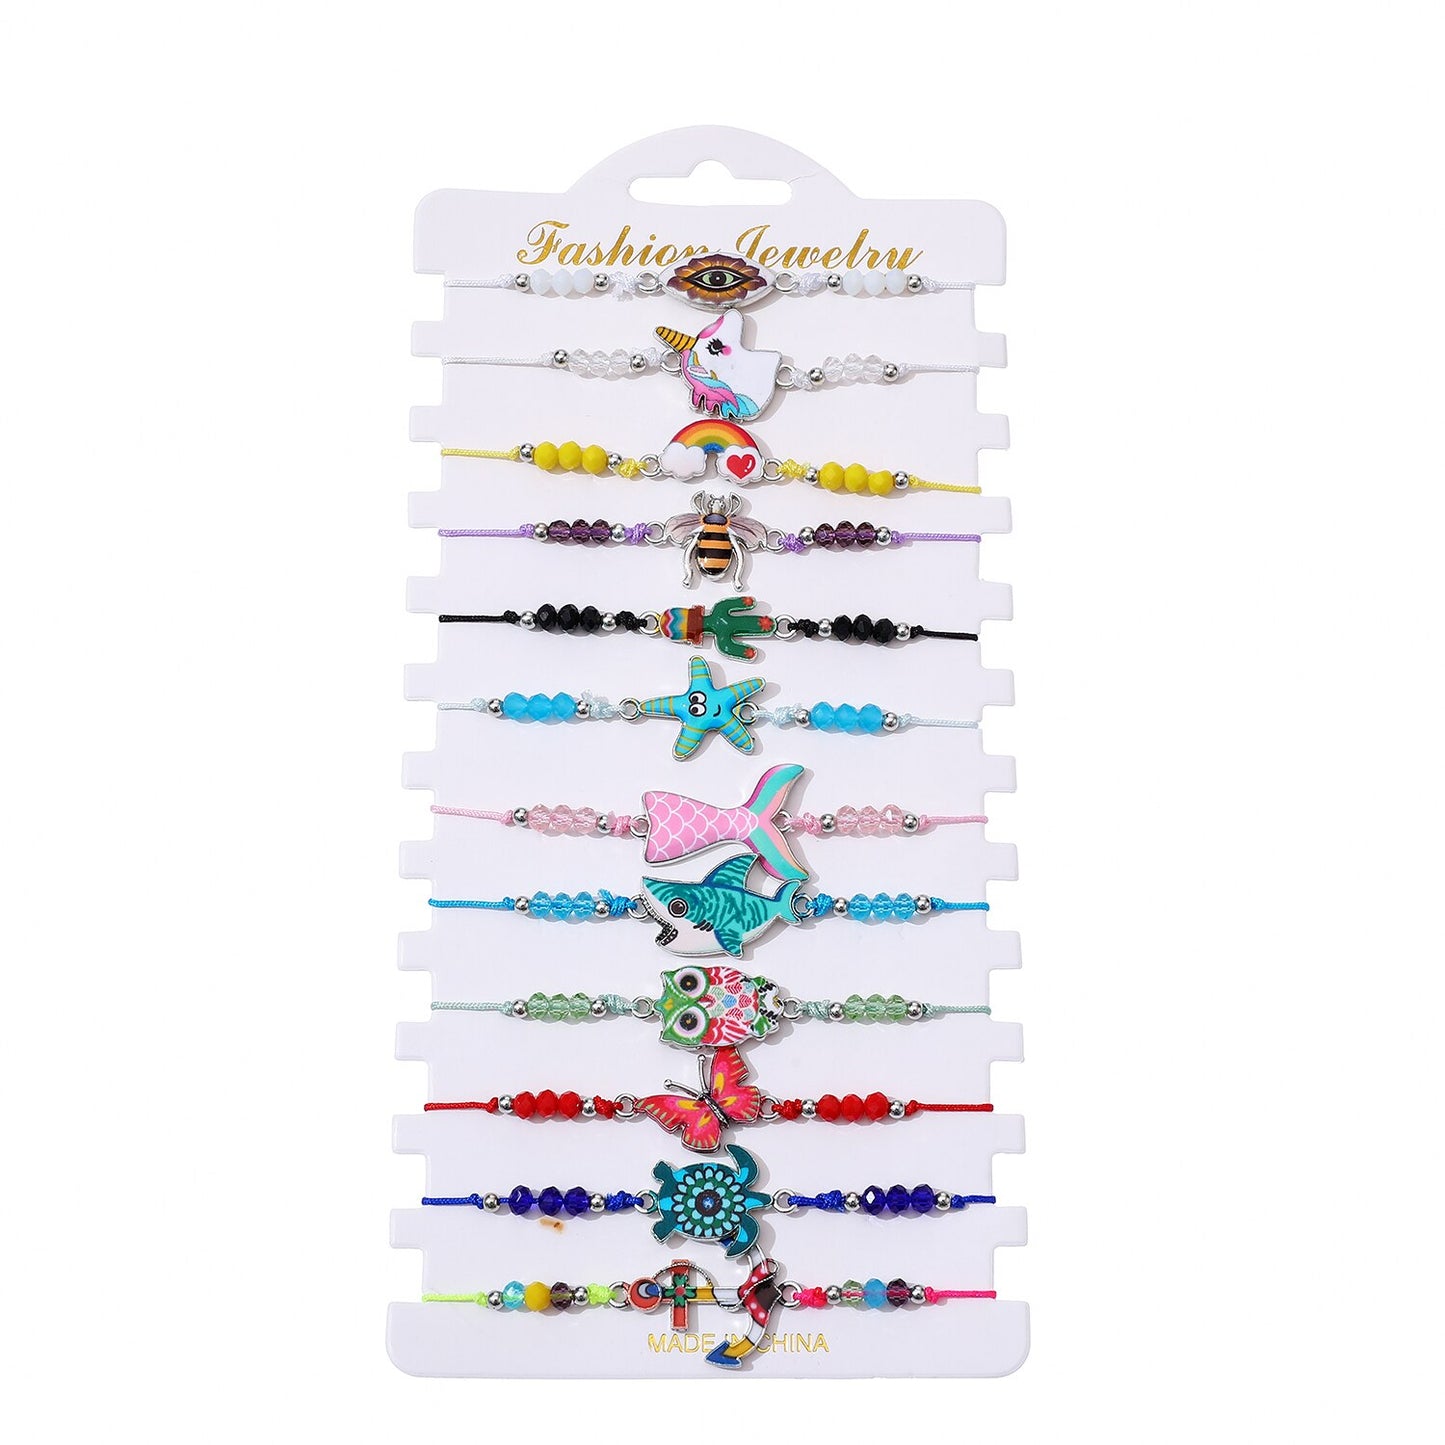 12pcs Turtle Unicorn Pendant Bracelets for Women Adjustable Rope Bracelet Handmade Braided Colorful Crystal Beads Charm Bracelet